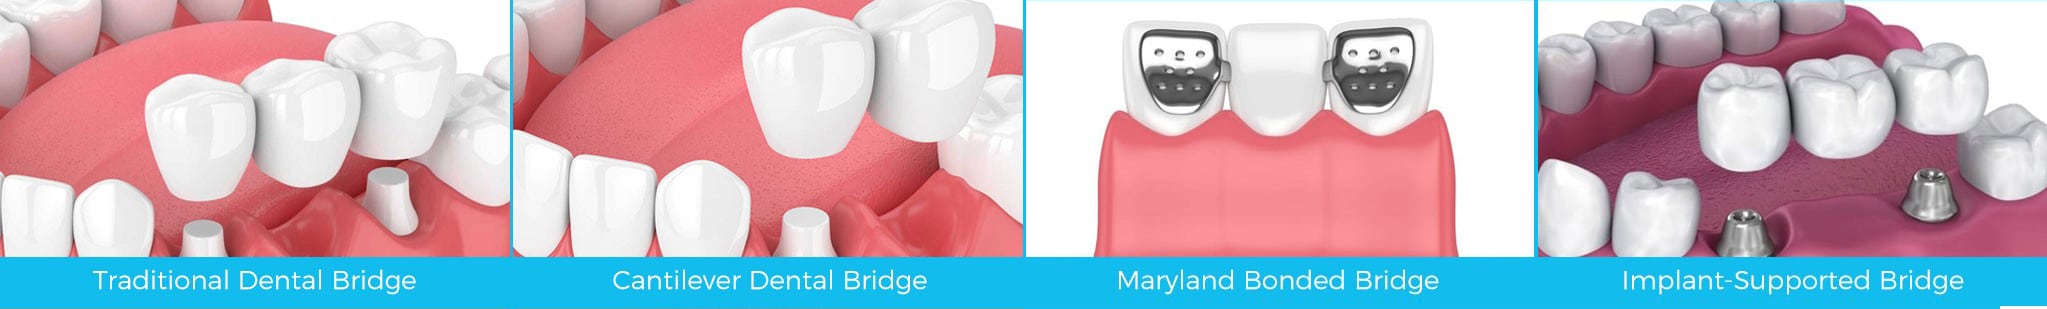 2 types of dental bridges